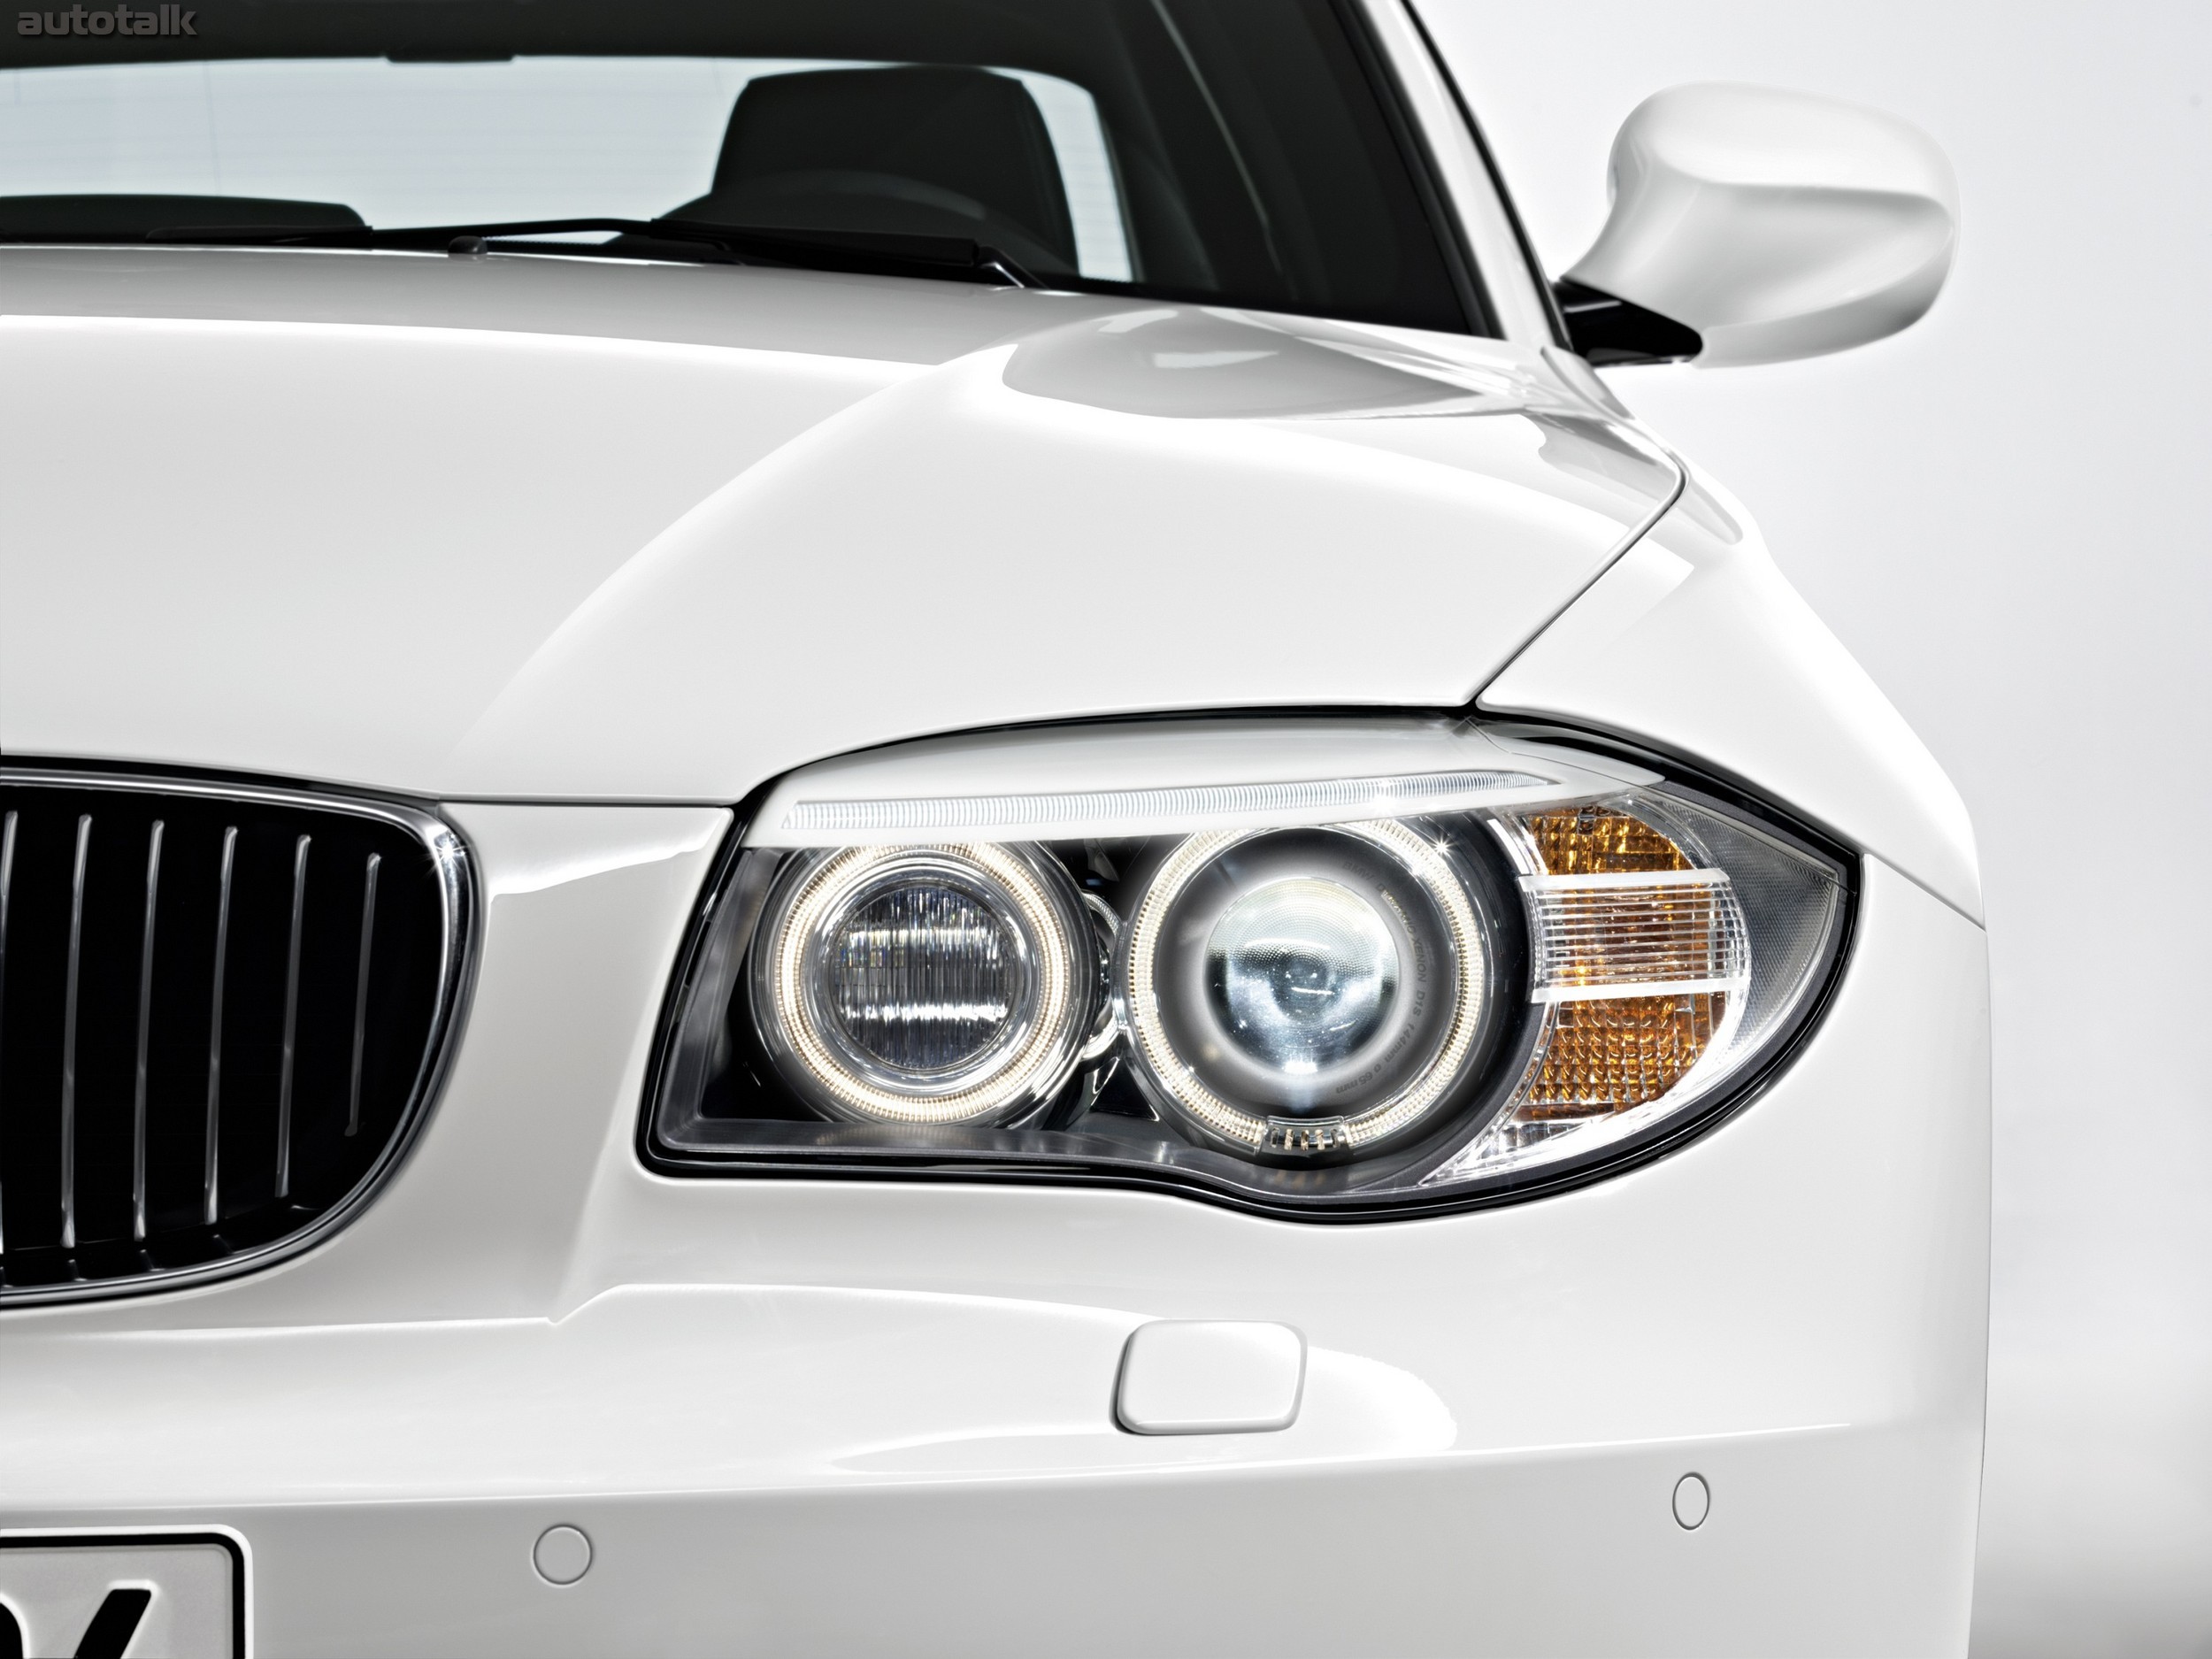 2012 BMW 1 Series Convertible